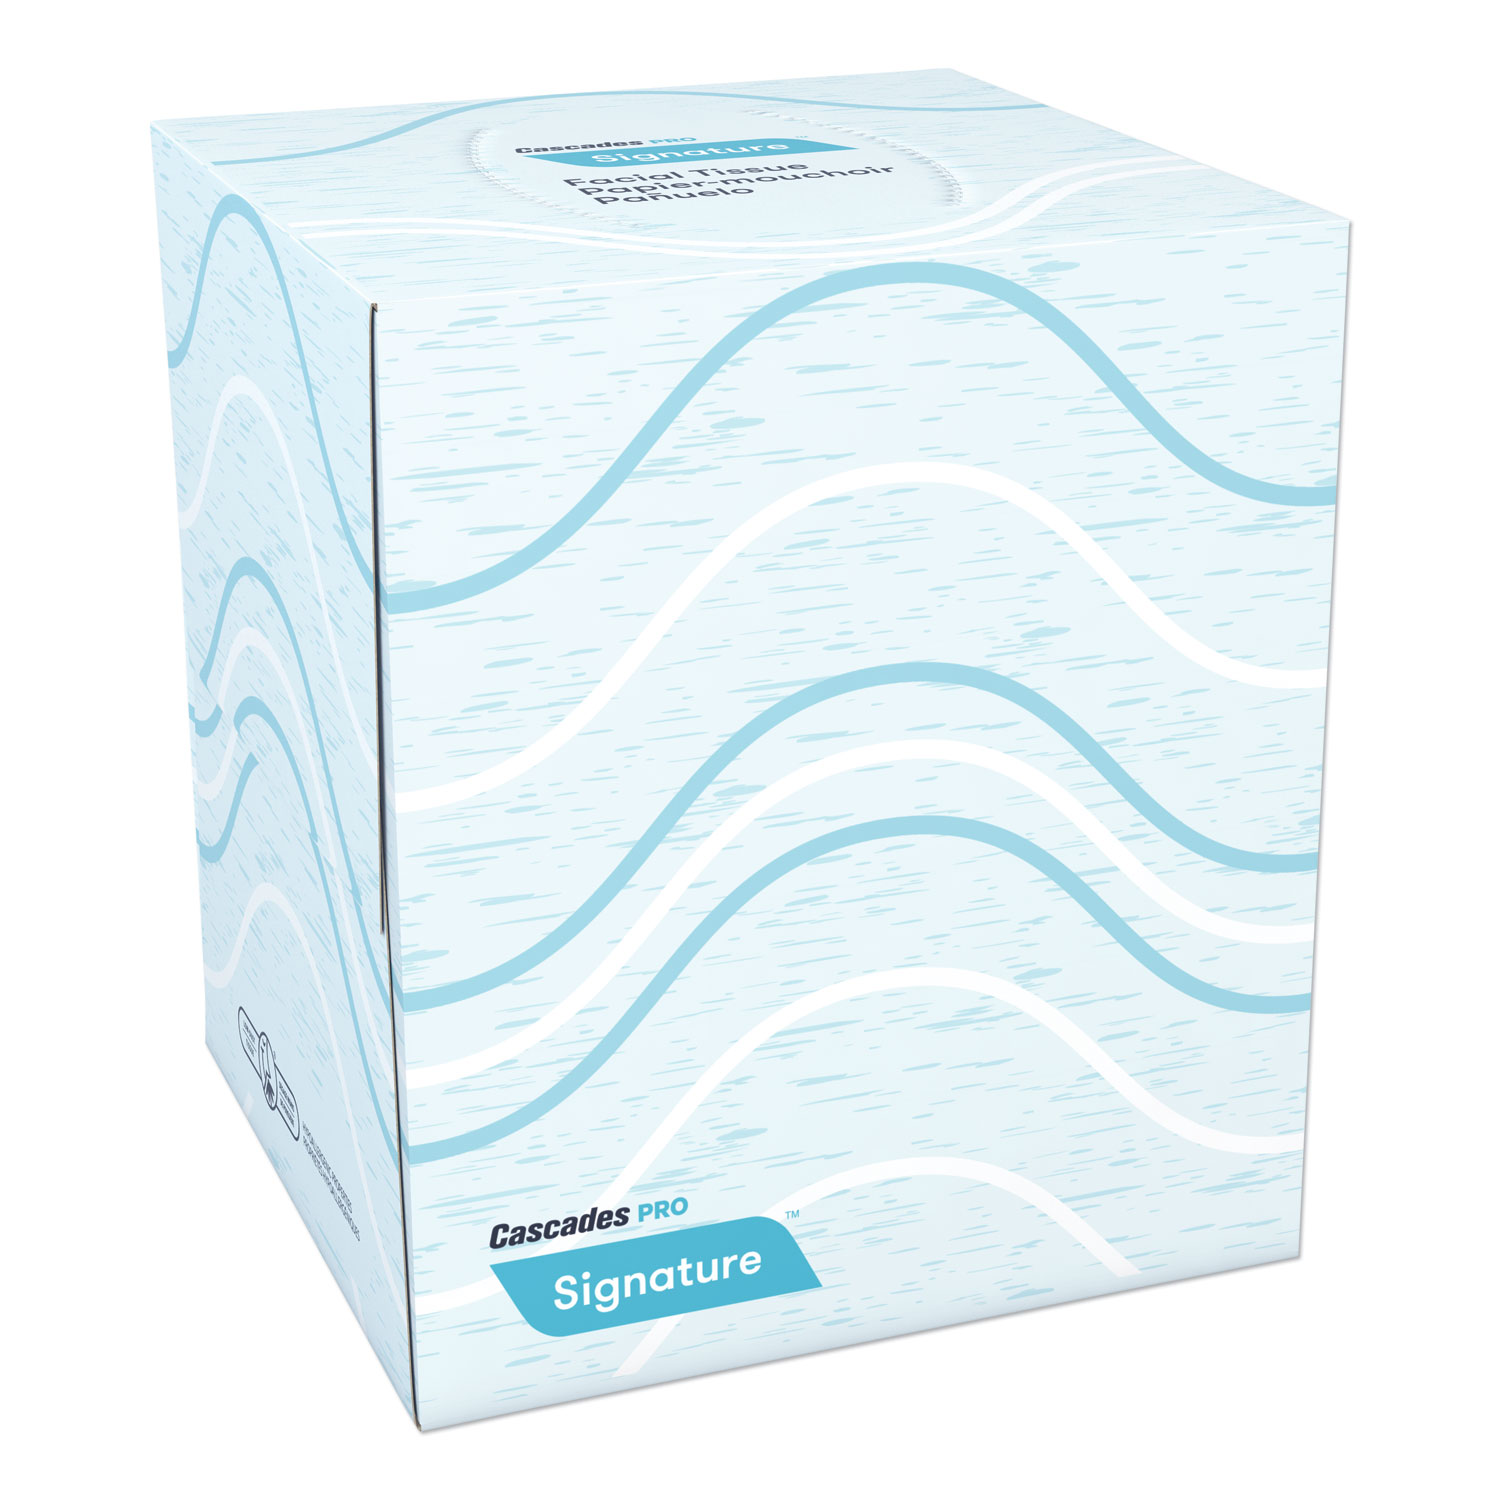  Cascades PRO F710 Signature Facial Tissue, 2-Ply, White, Cube, 90 Sheets/Box, 36 Boxes/Carton (CSDF710) 